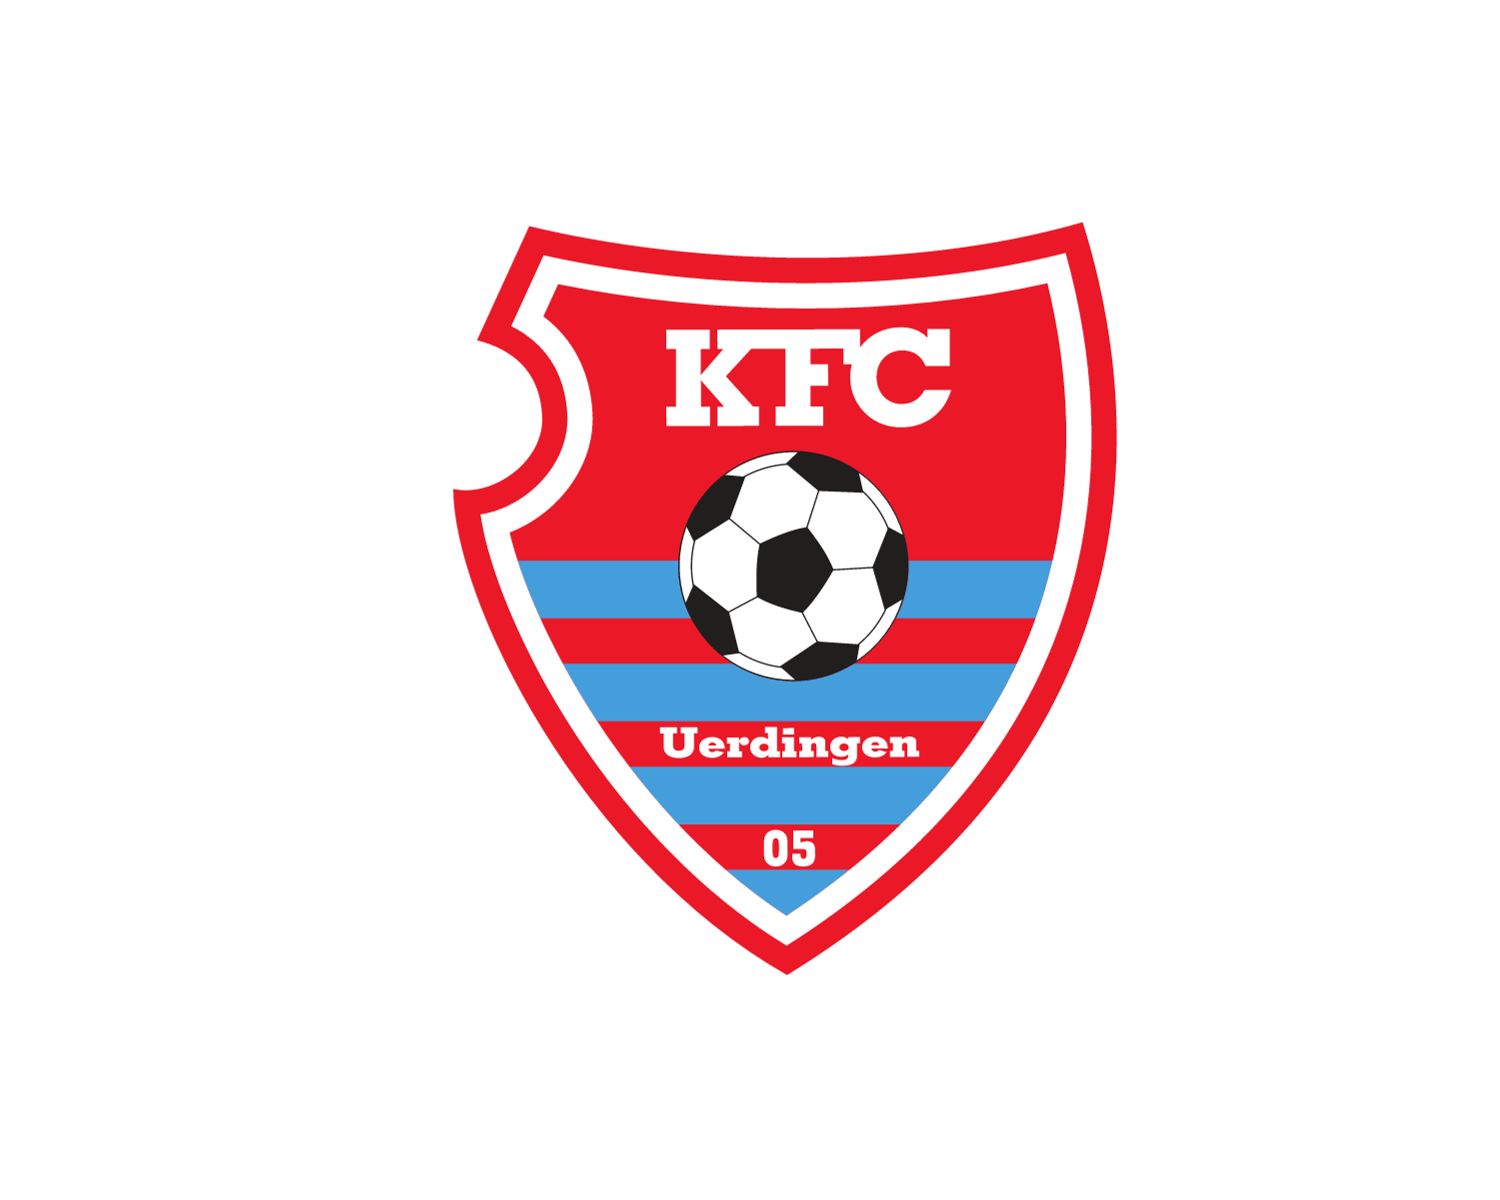 kfc-uerdingen-05-15-football-club-facts